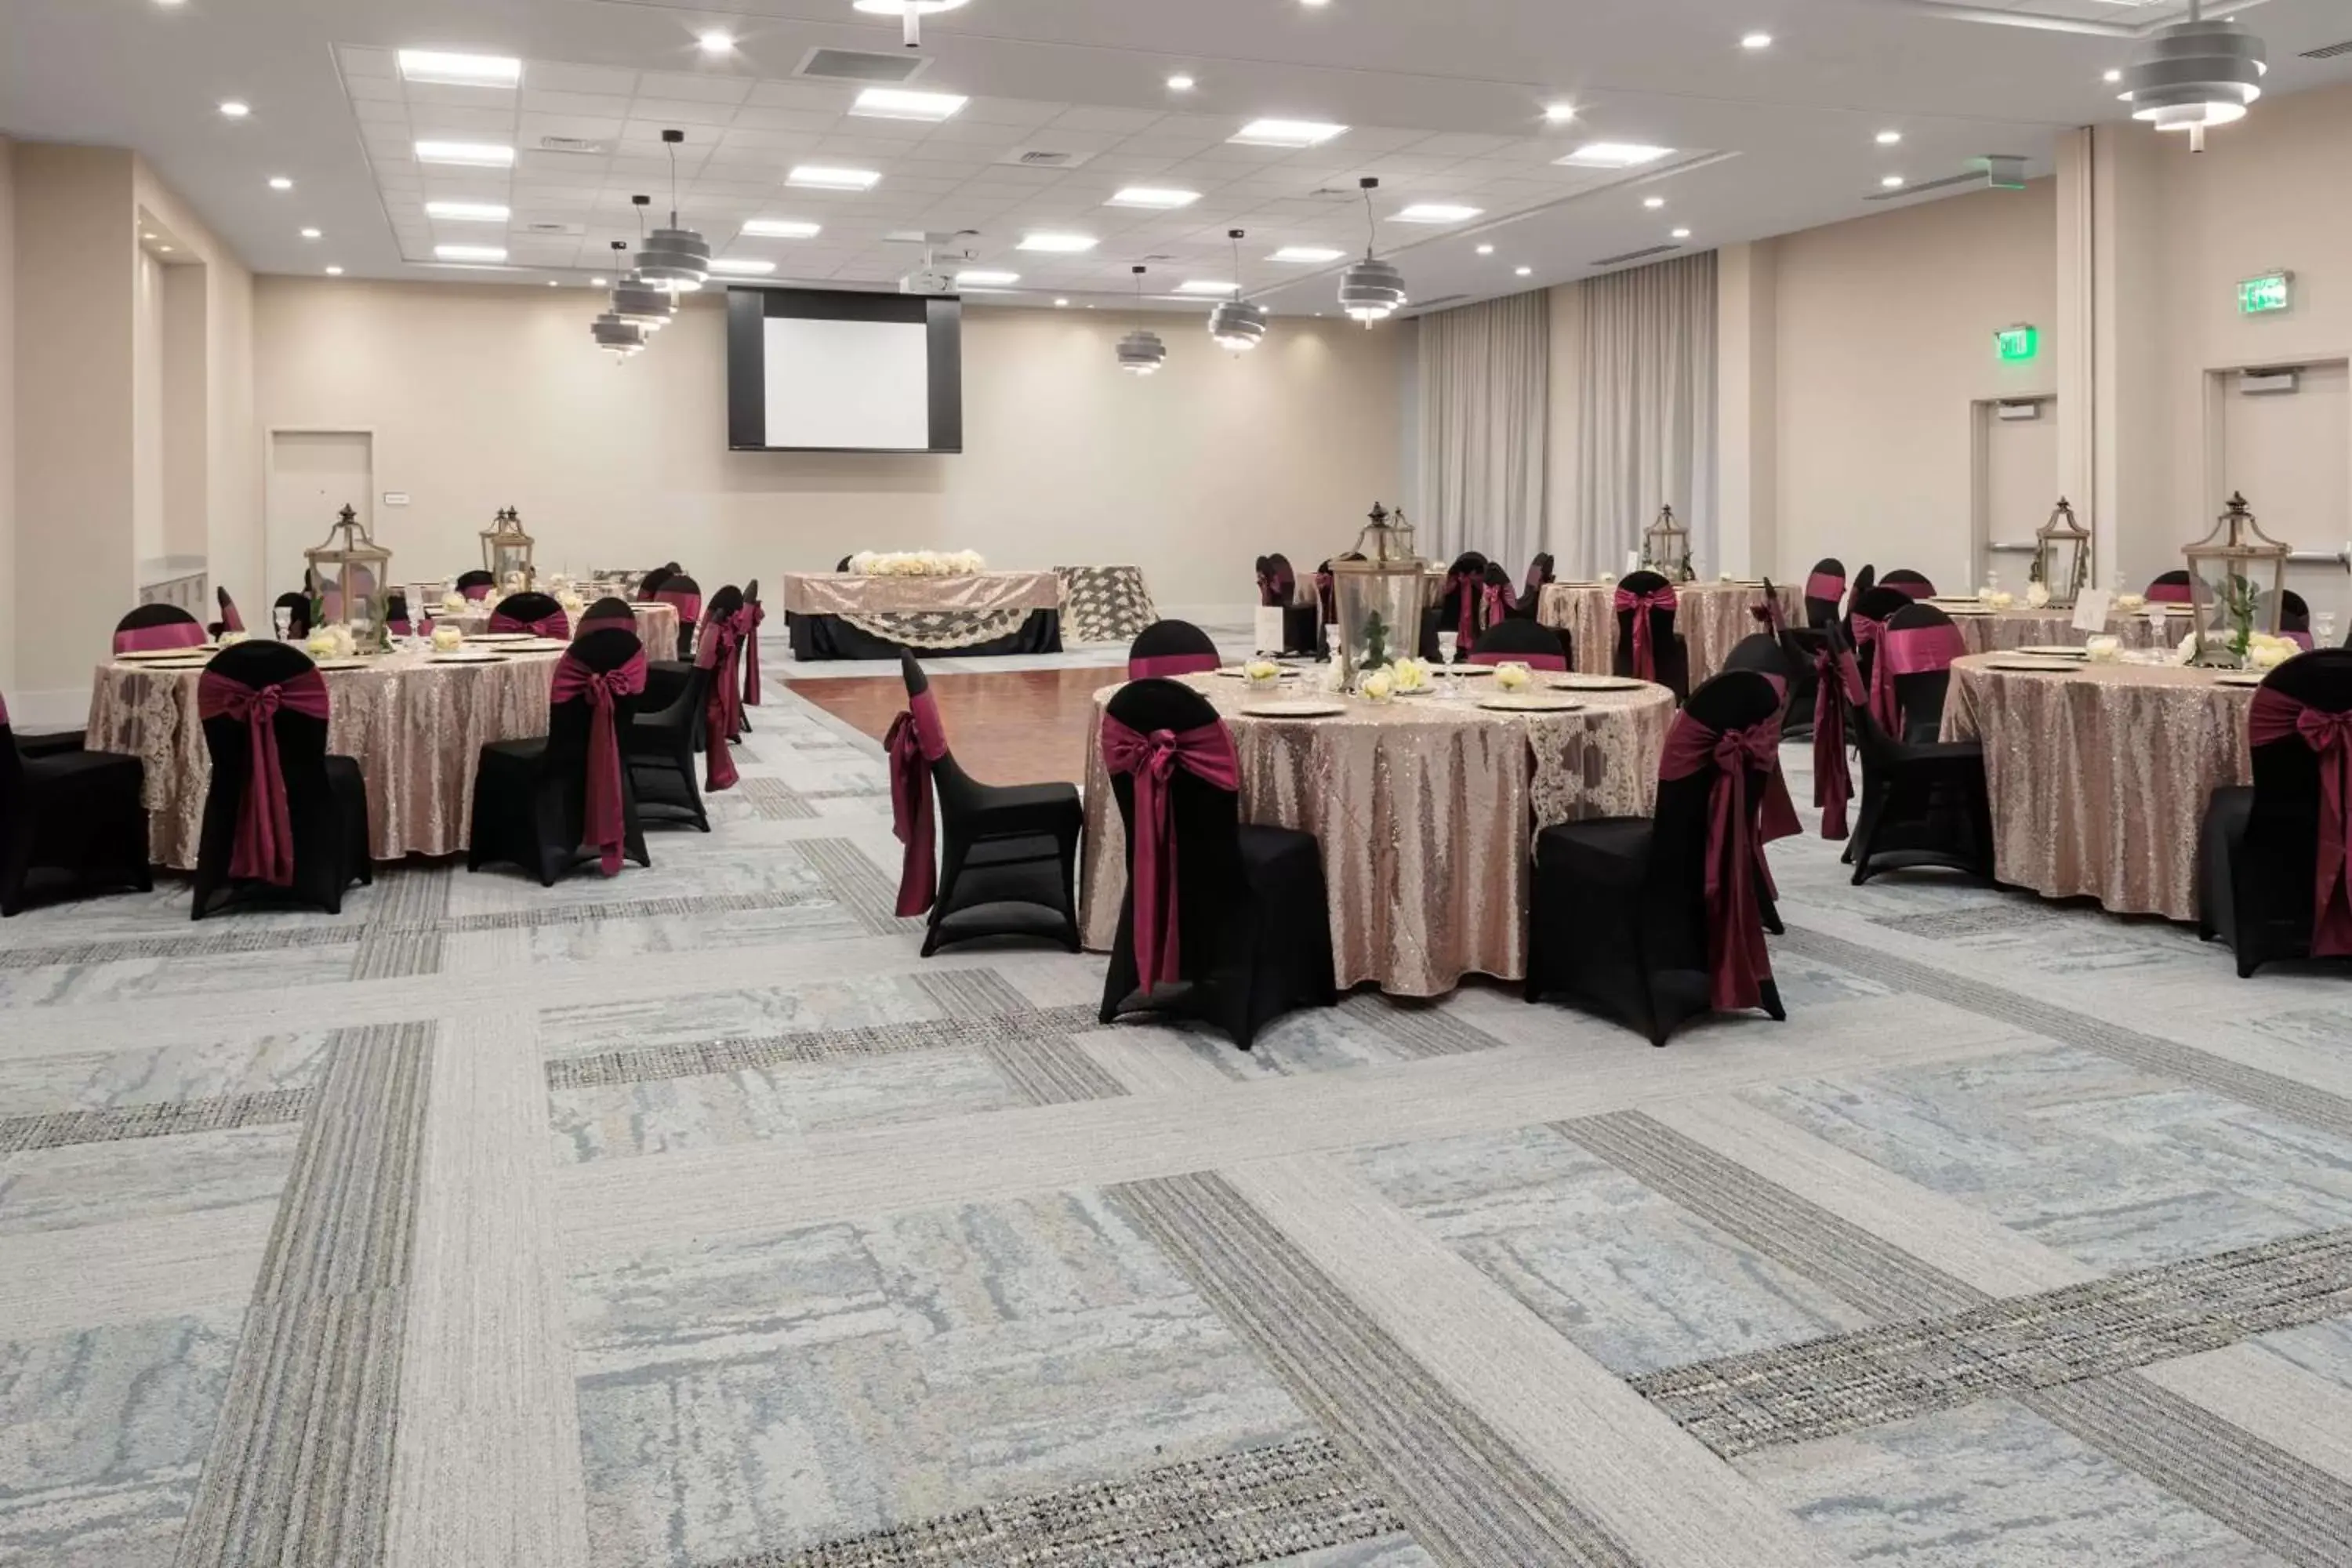 Meeting/conference room, Banquet Facilities in Hilton Garden Inn Ocala Downtown, Fl